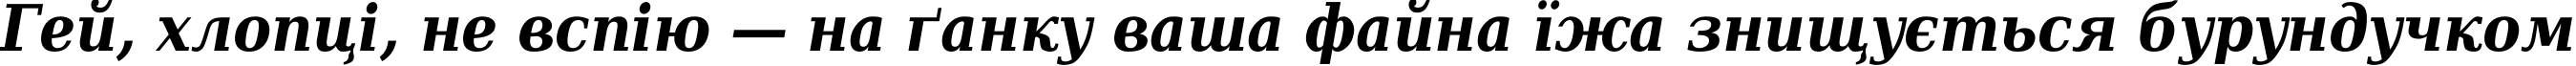 Пример написания шрифтом DejaVu Serif Condensed Bold Italic текста на украинском